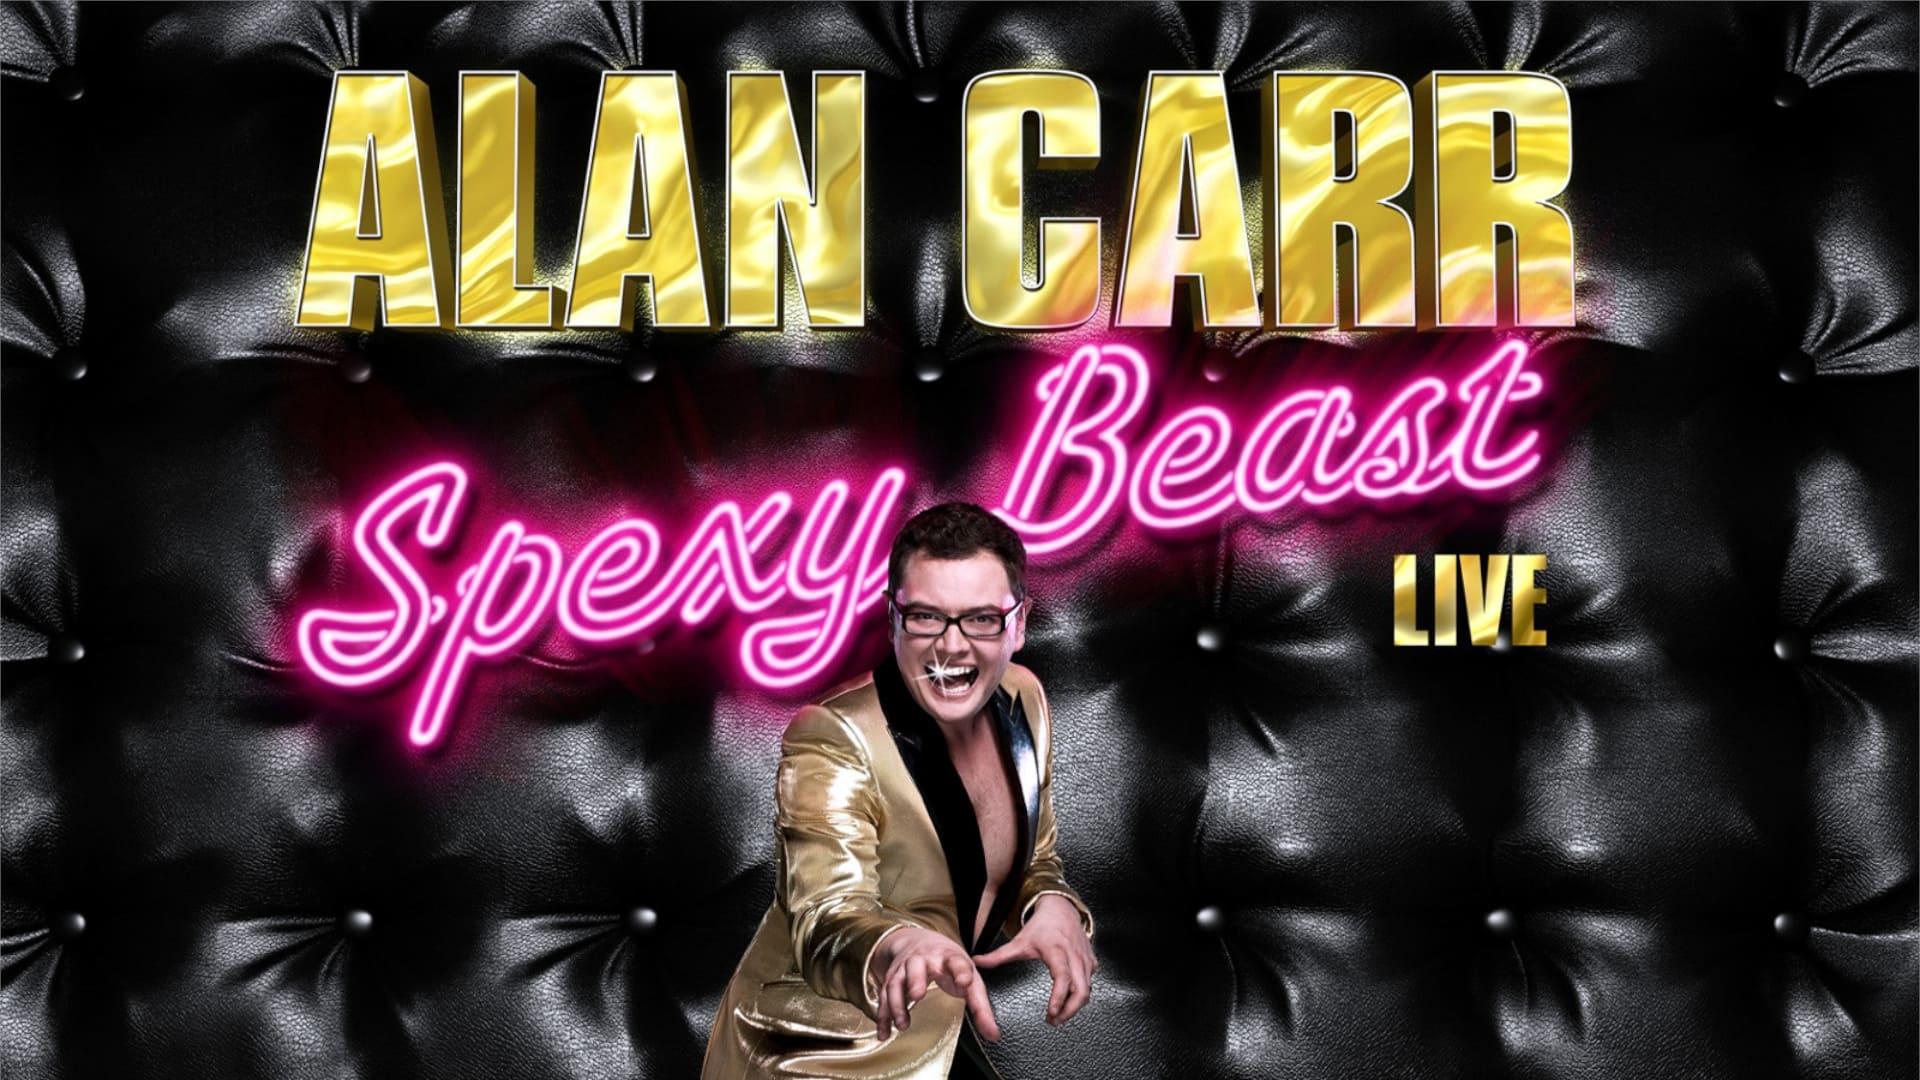 Alan Carr: Spexy Beast backdrop